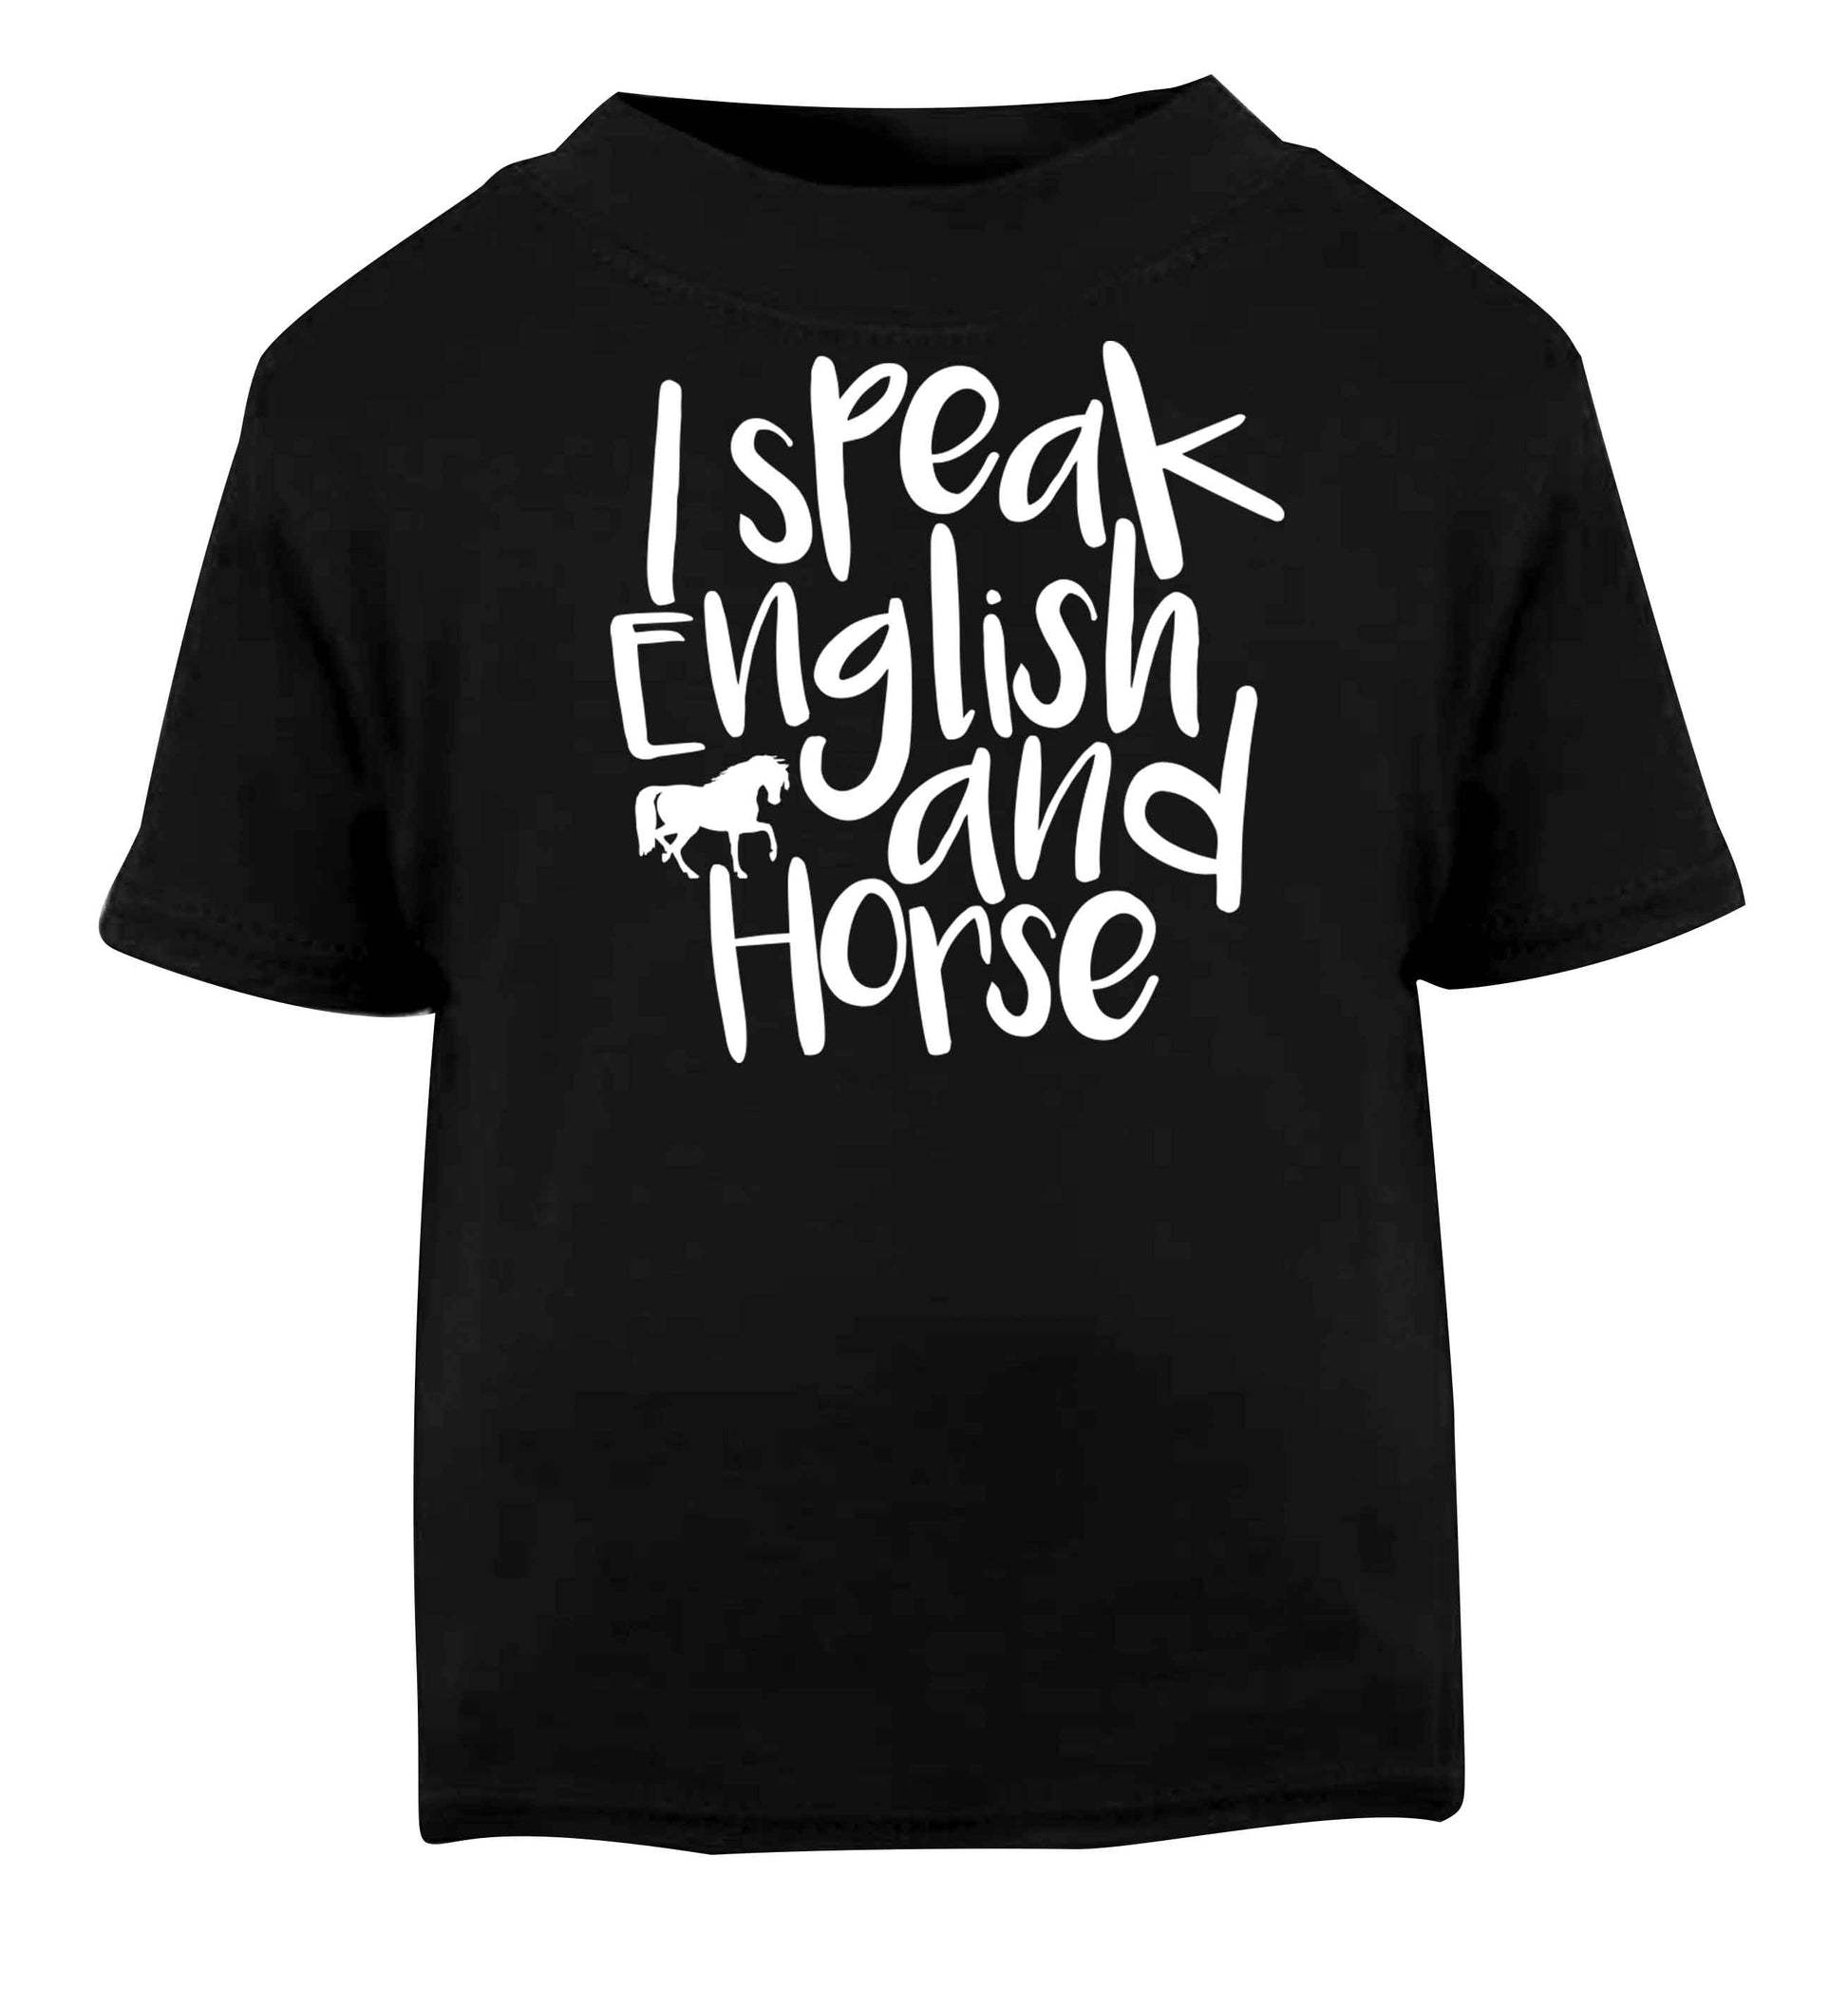 I speak English and horse Black baby toddler Tshirt 2 years